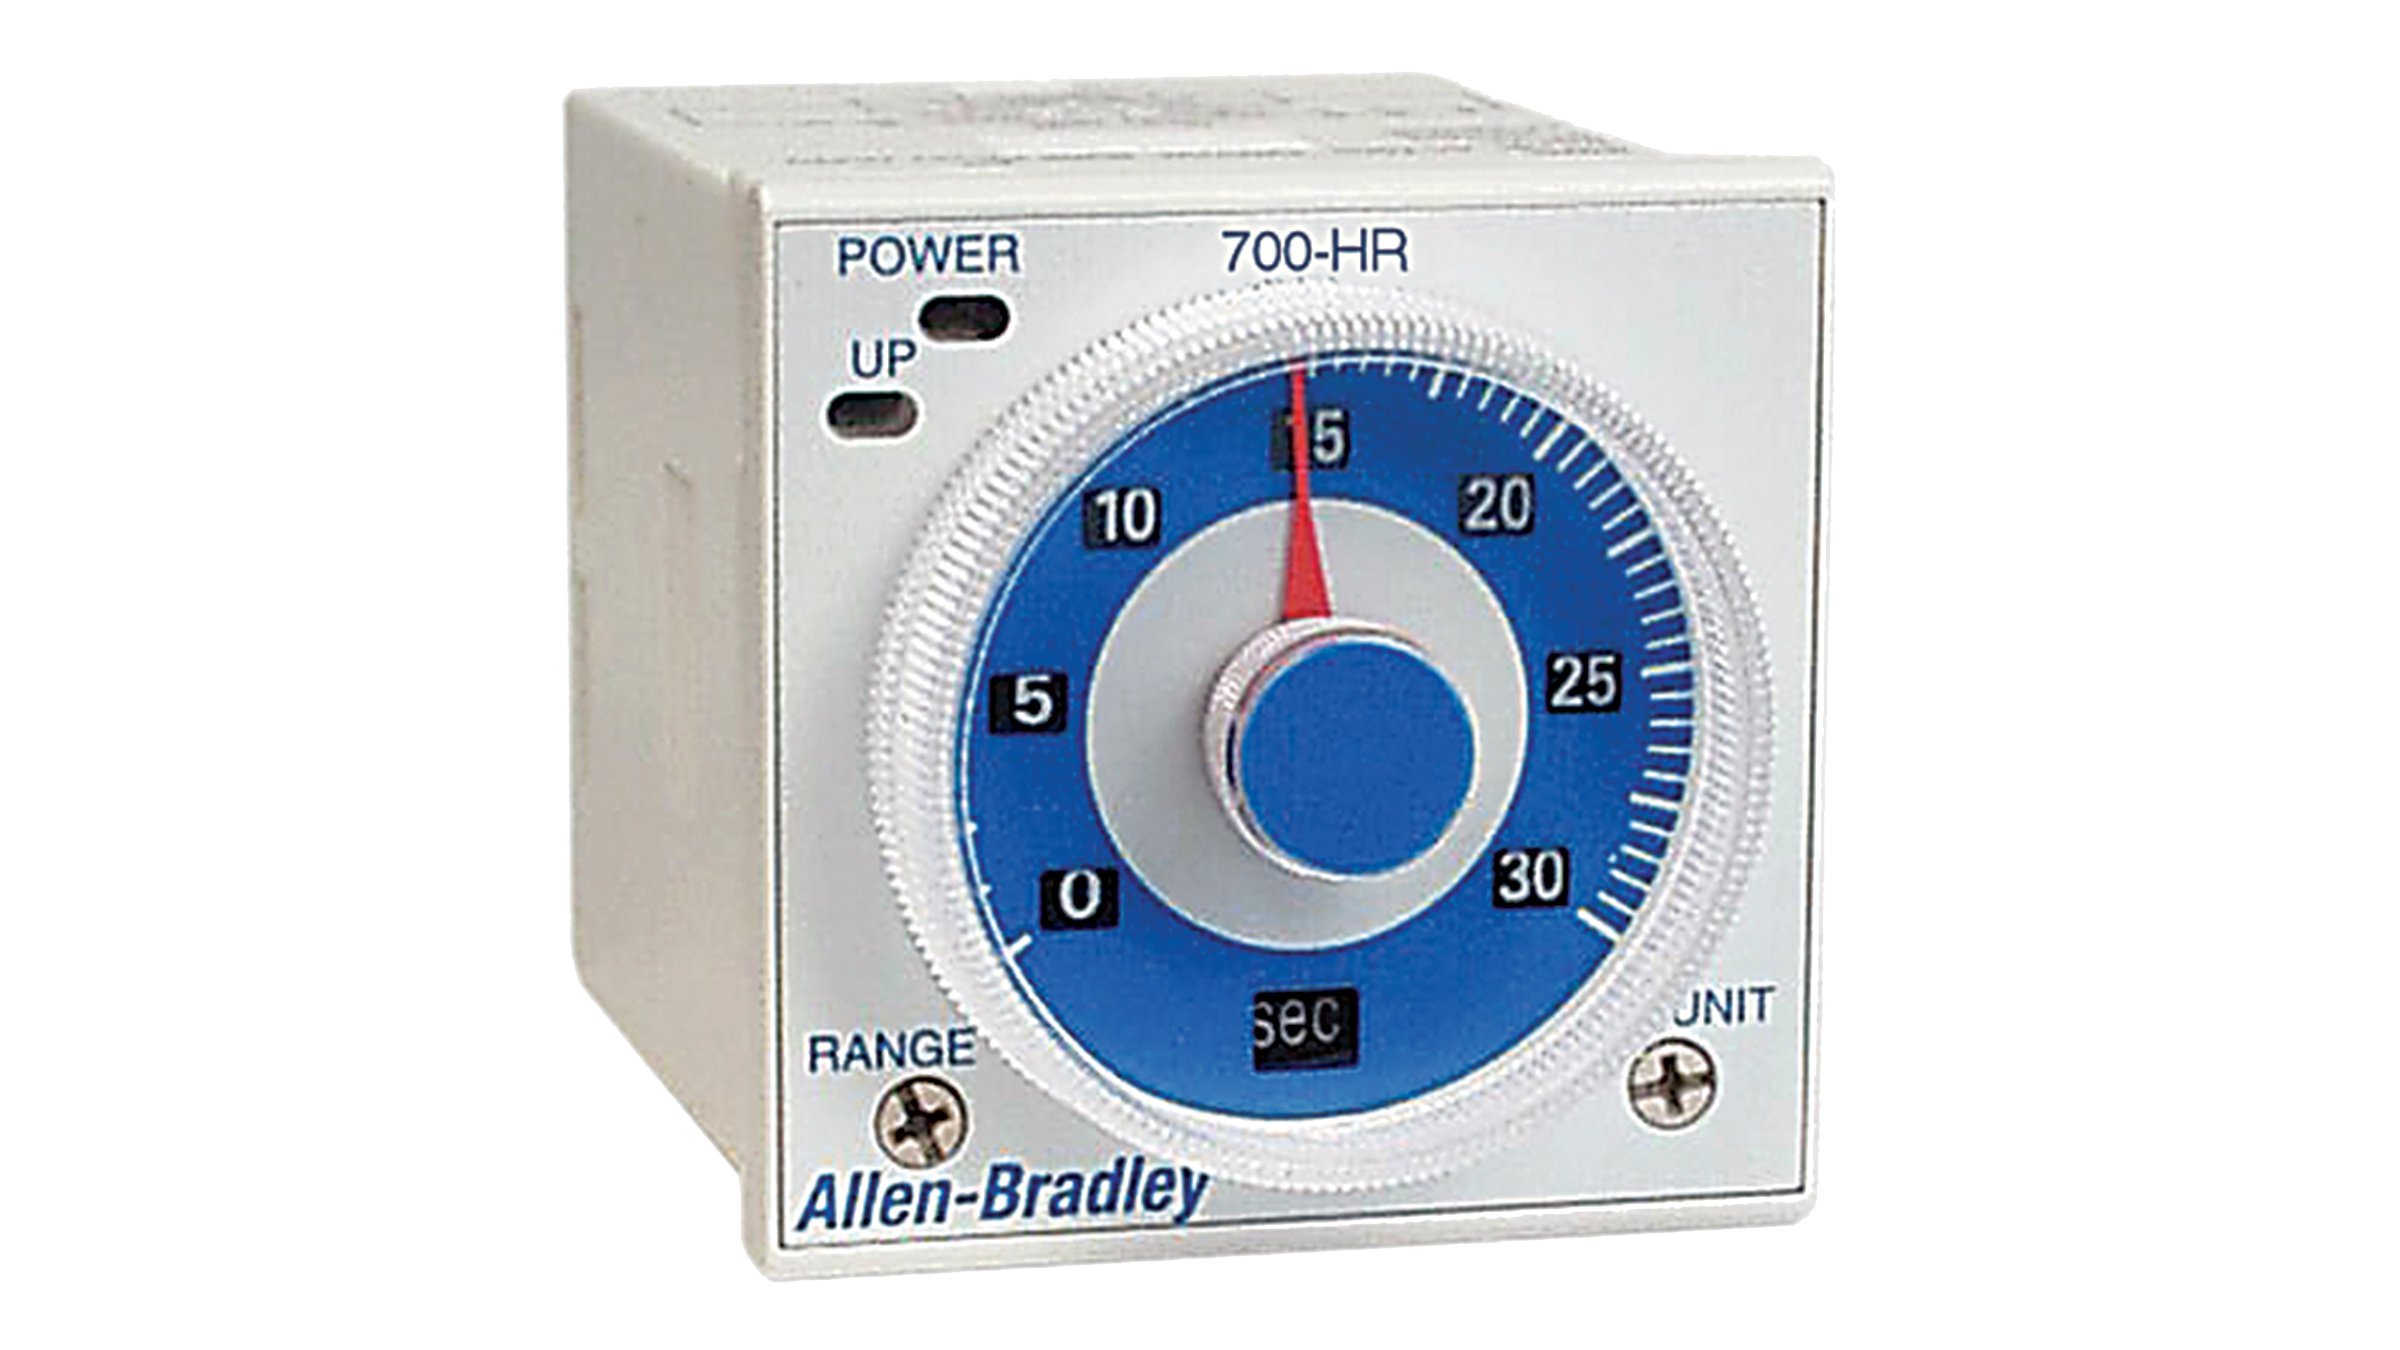 Allen-Bradley Bulletin 700-HR 拨盘型定时继电器是插座安装式插件定时继电器。